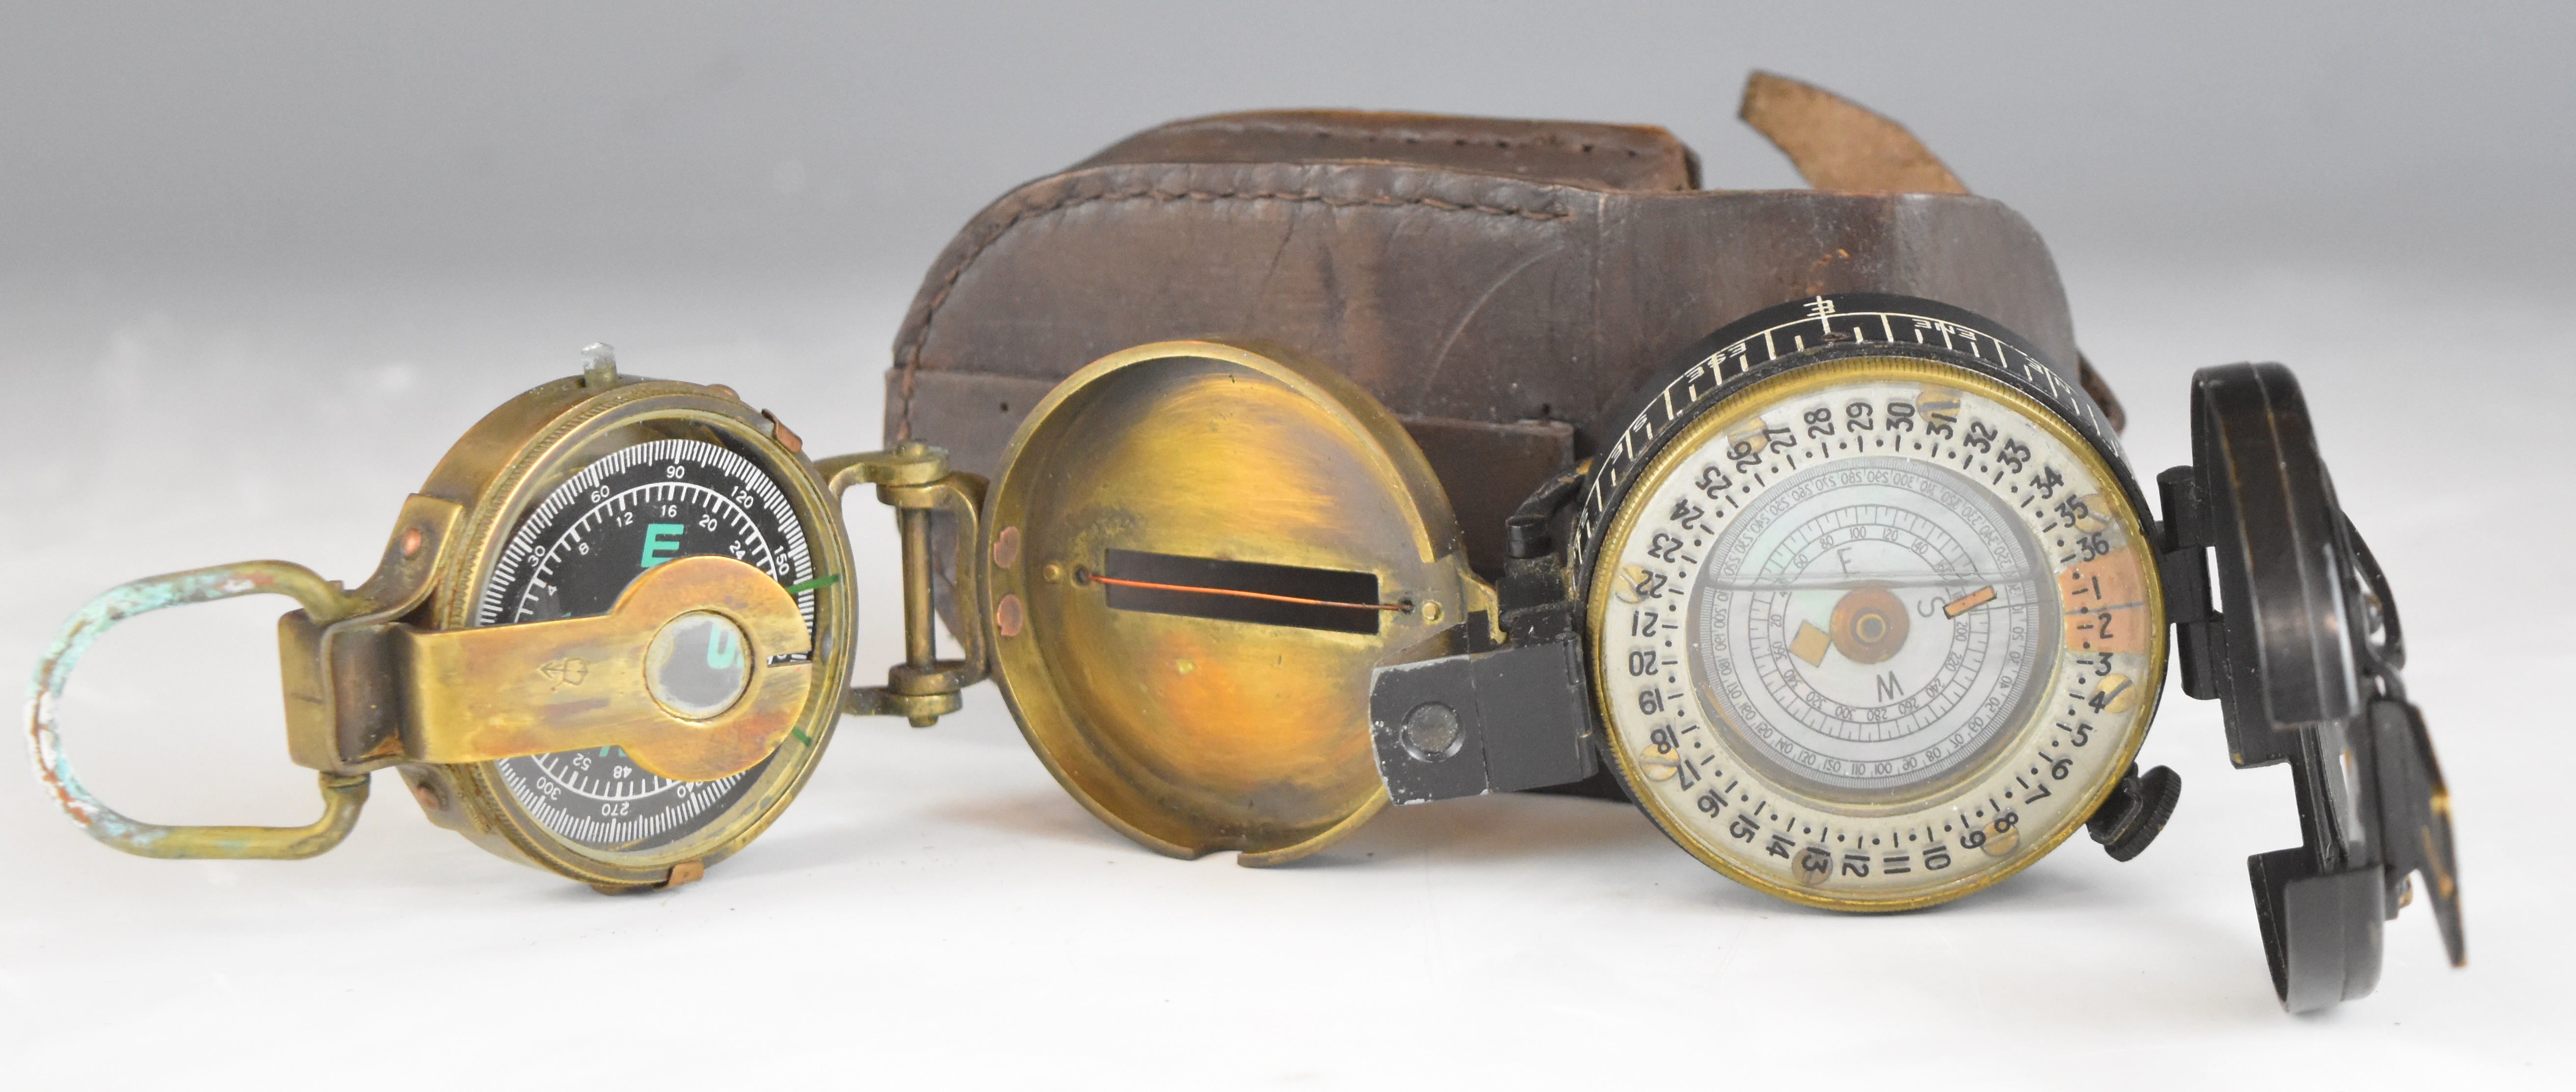 British WW2 prismatic compass by T G Co Ltd, London No B187104 1942 Mk III, with broad arrow mark,